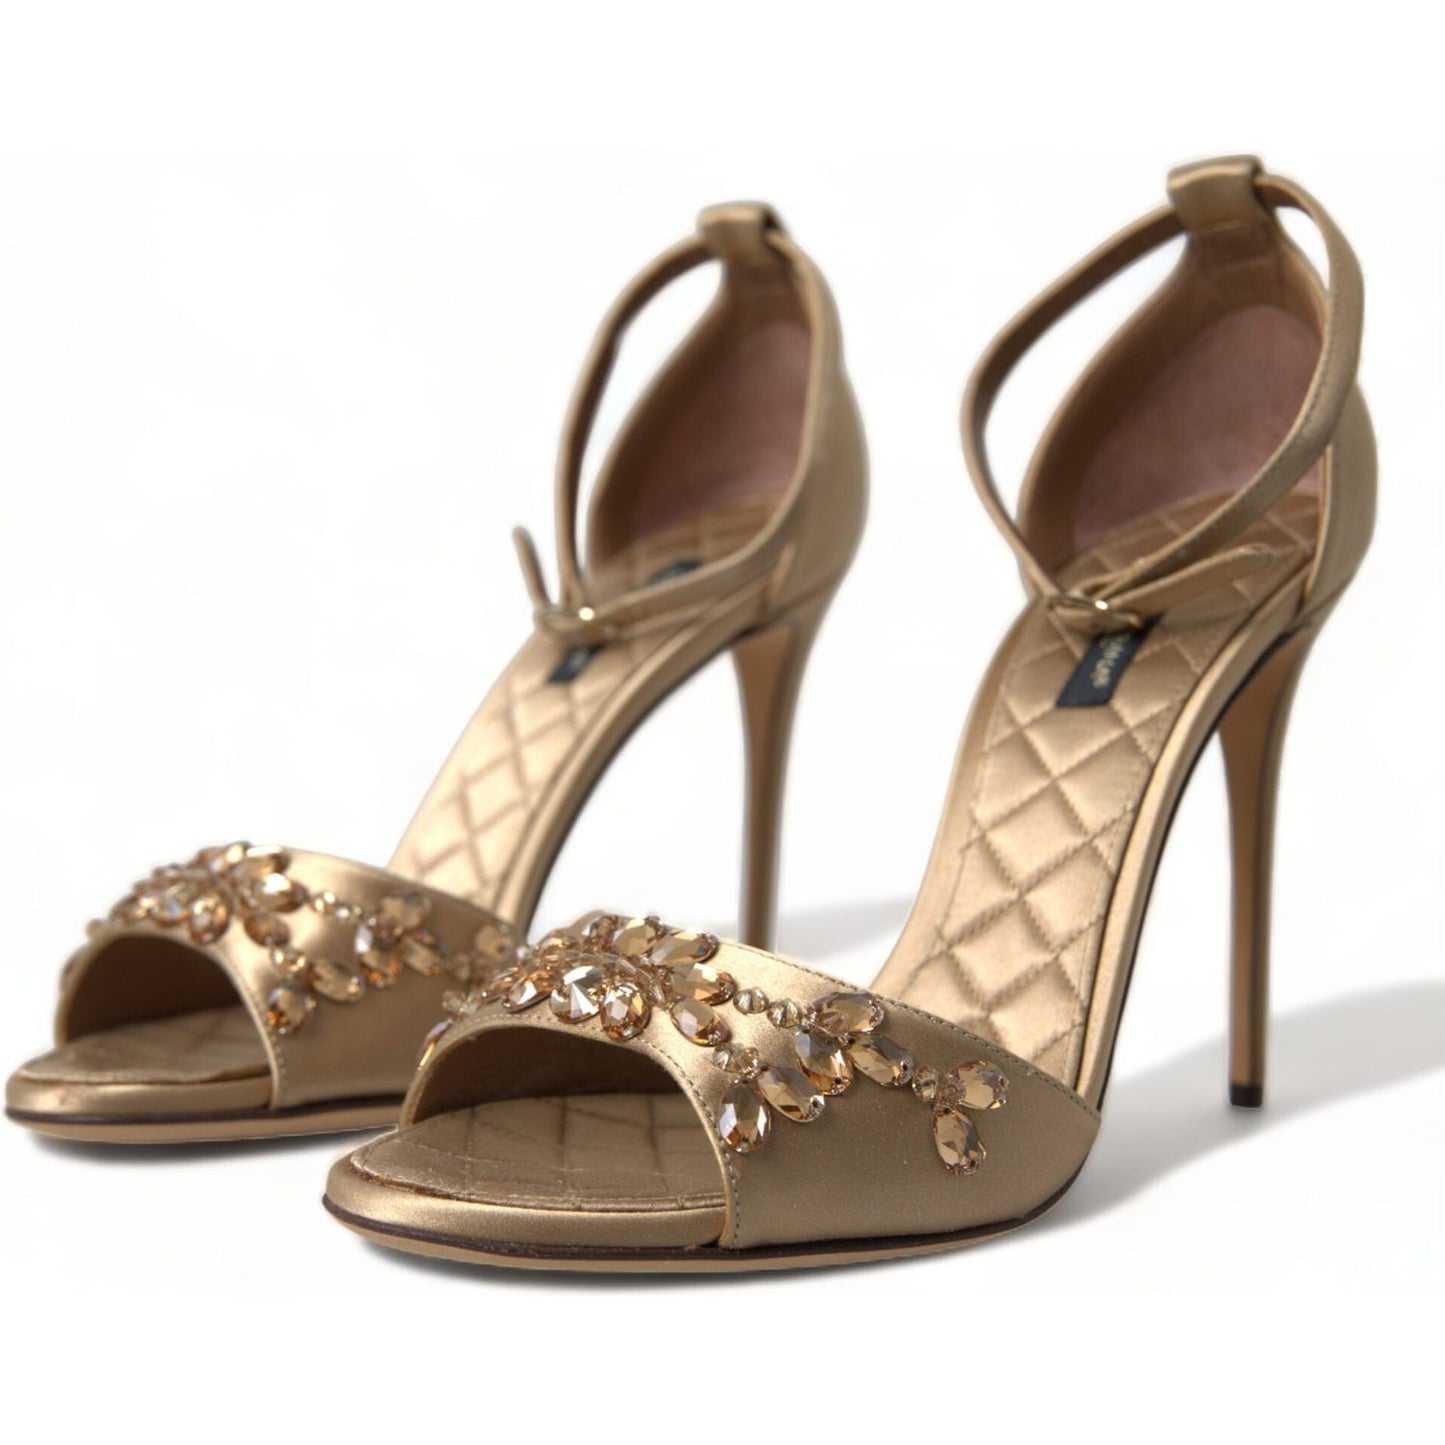 Dolce & Gabbana Crystal Embellished Heel Sandals gold-satin-ankle-strap-crystal-sandals-shoes 465A9642-bg-scaled-e642e894-cc4.jpg